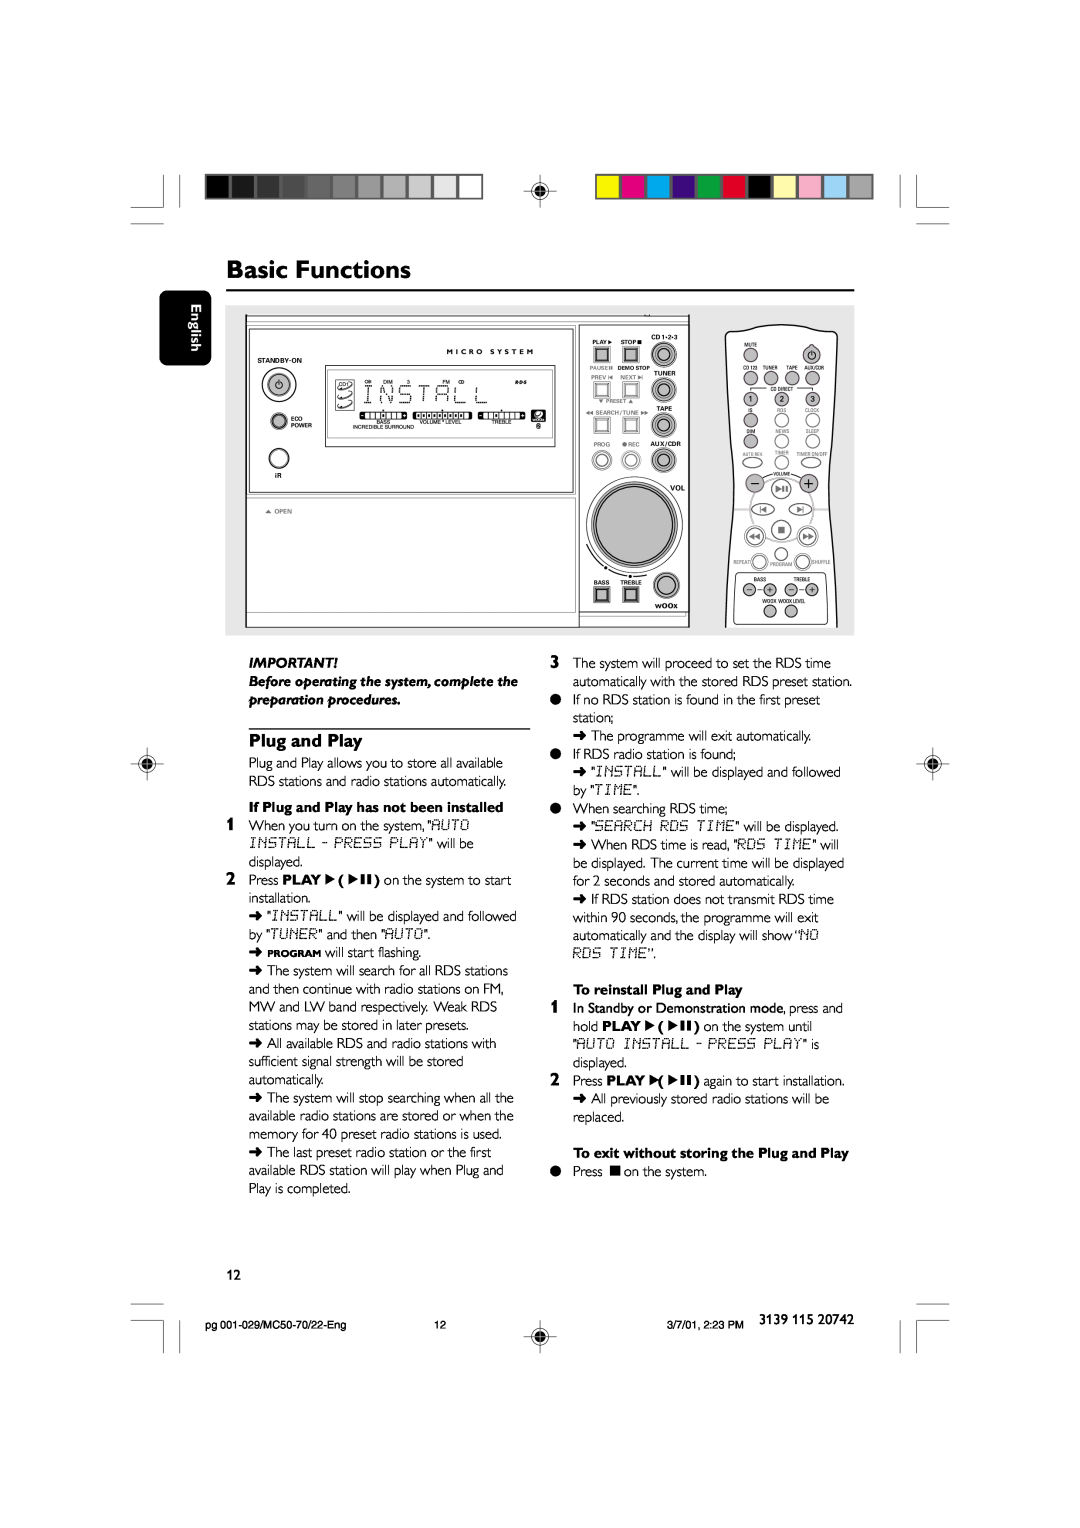 Philips MC-70 manual Basic Functions, To reinstall Plug and Play, English 